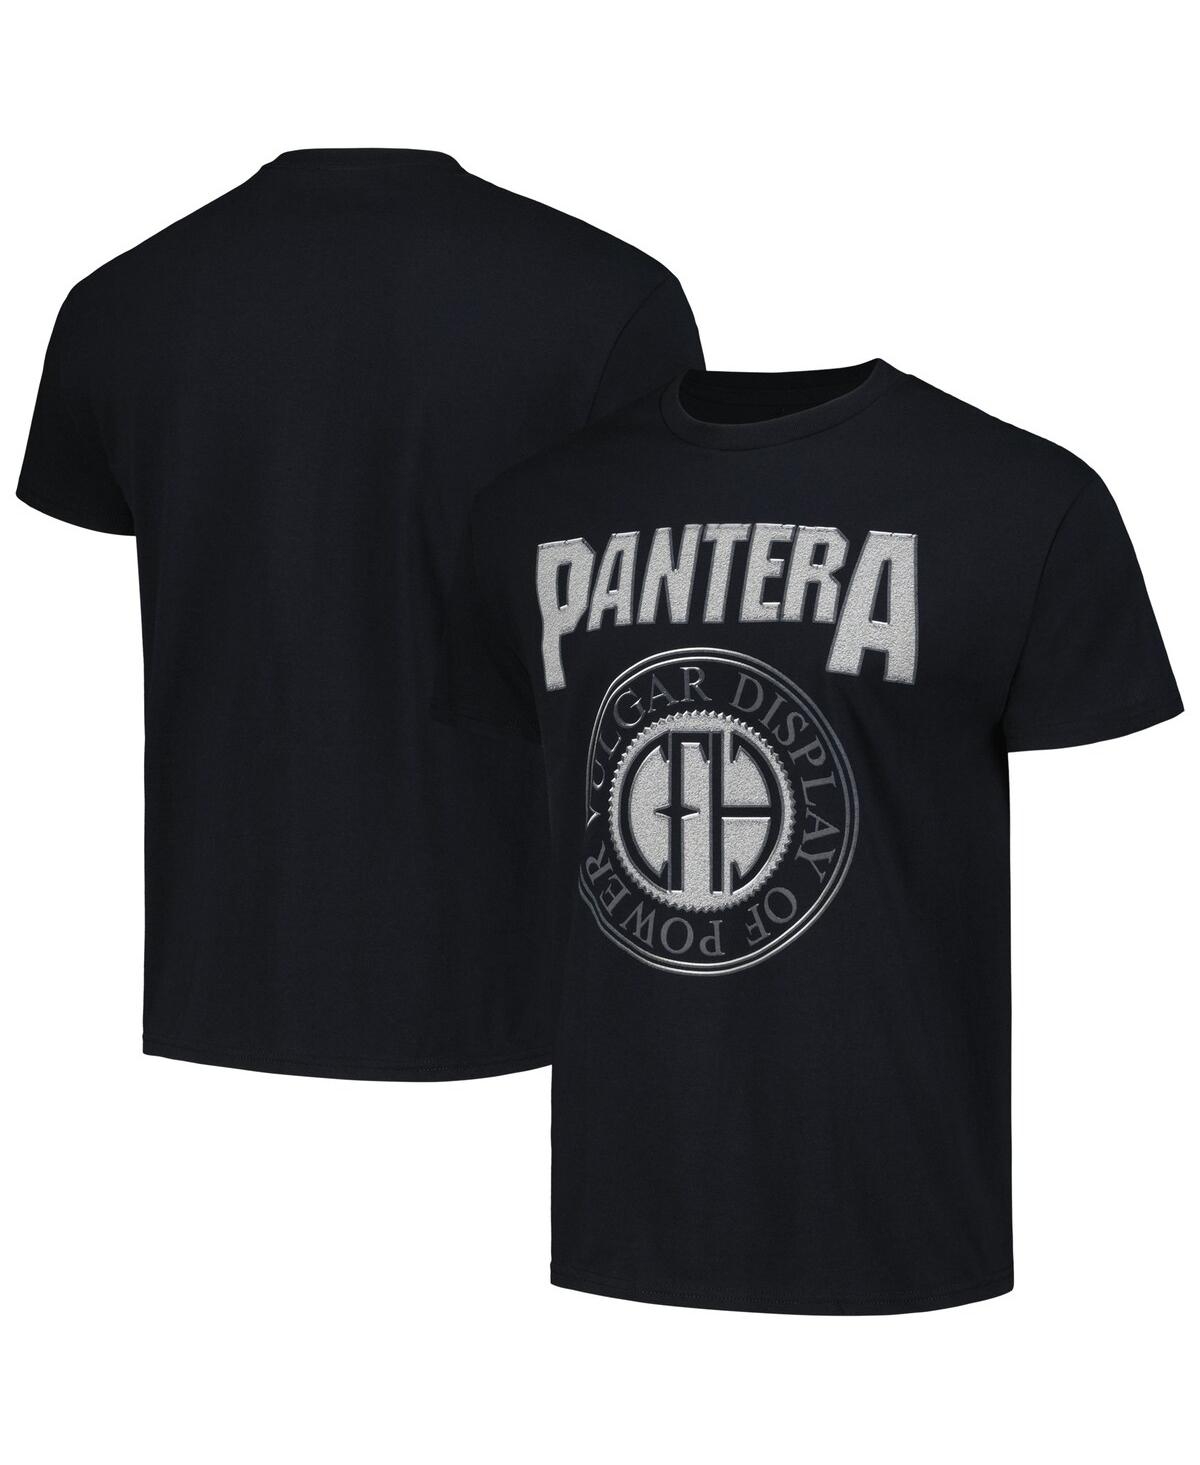 Men's and Women's Black Pantera Vulgar Display of Power T-shirt - Black